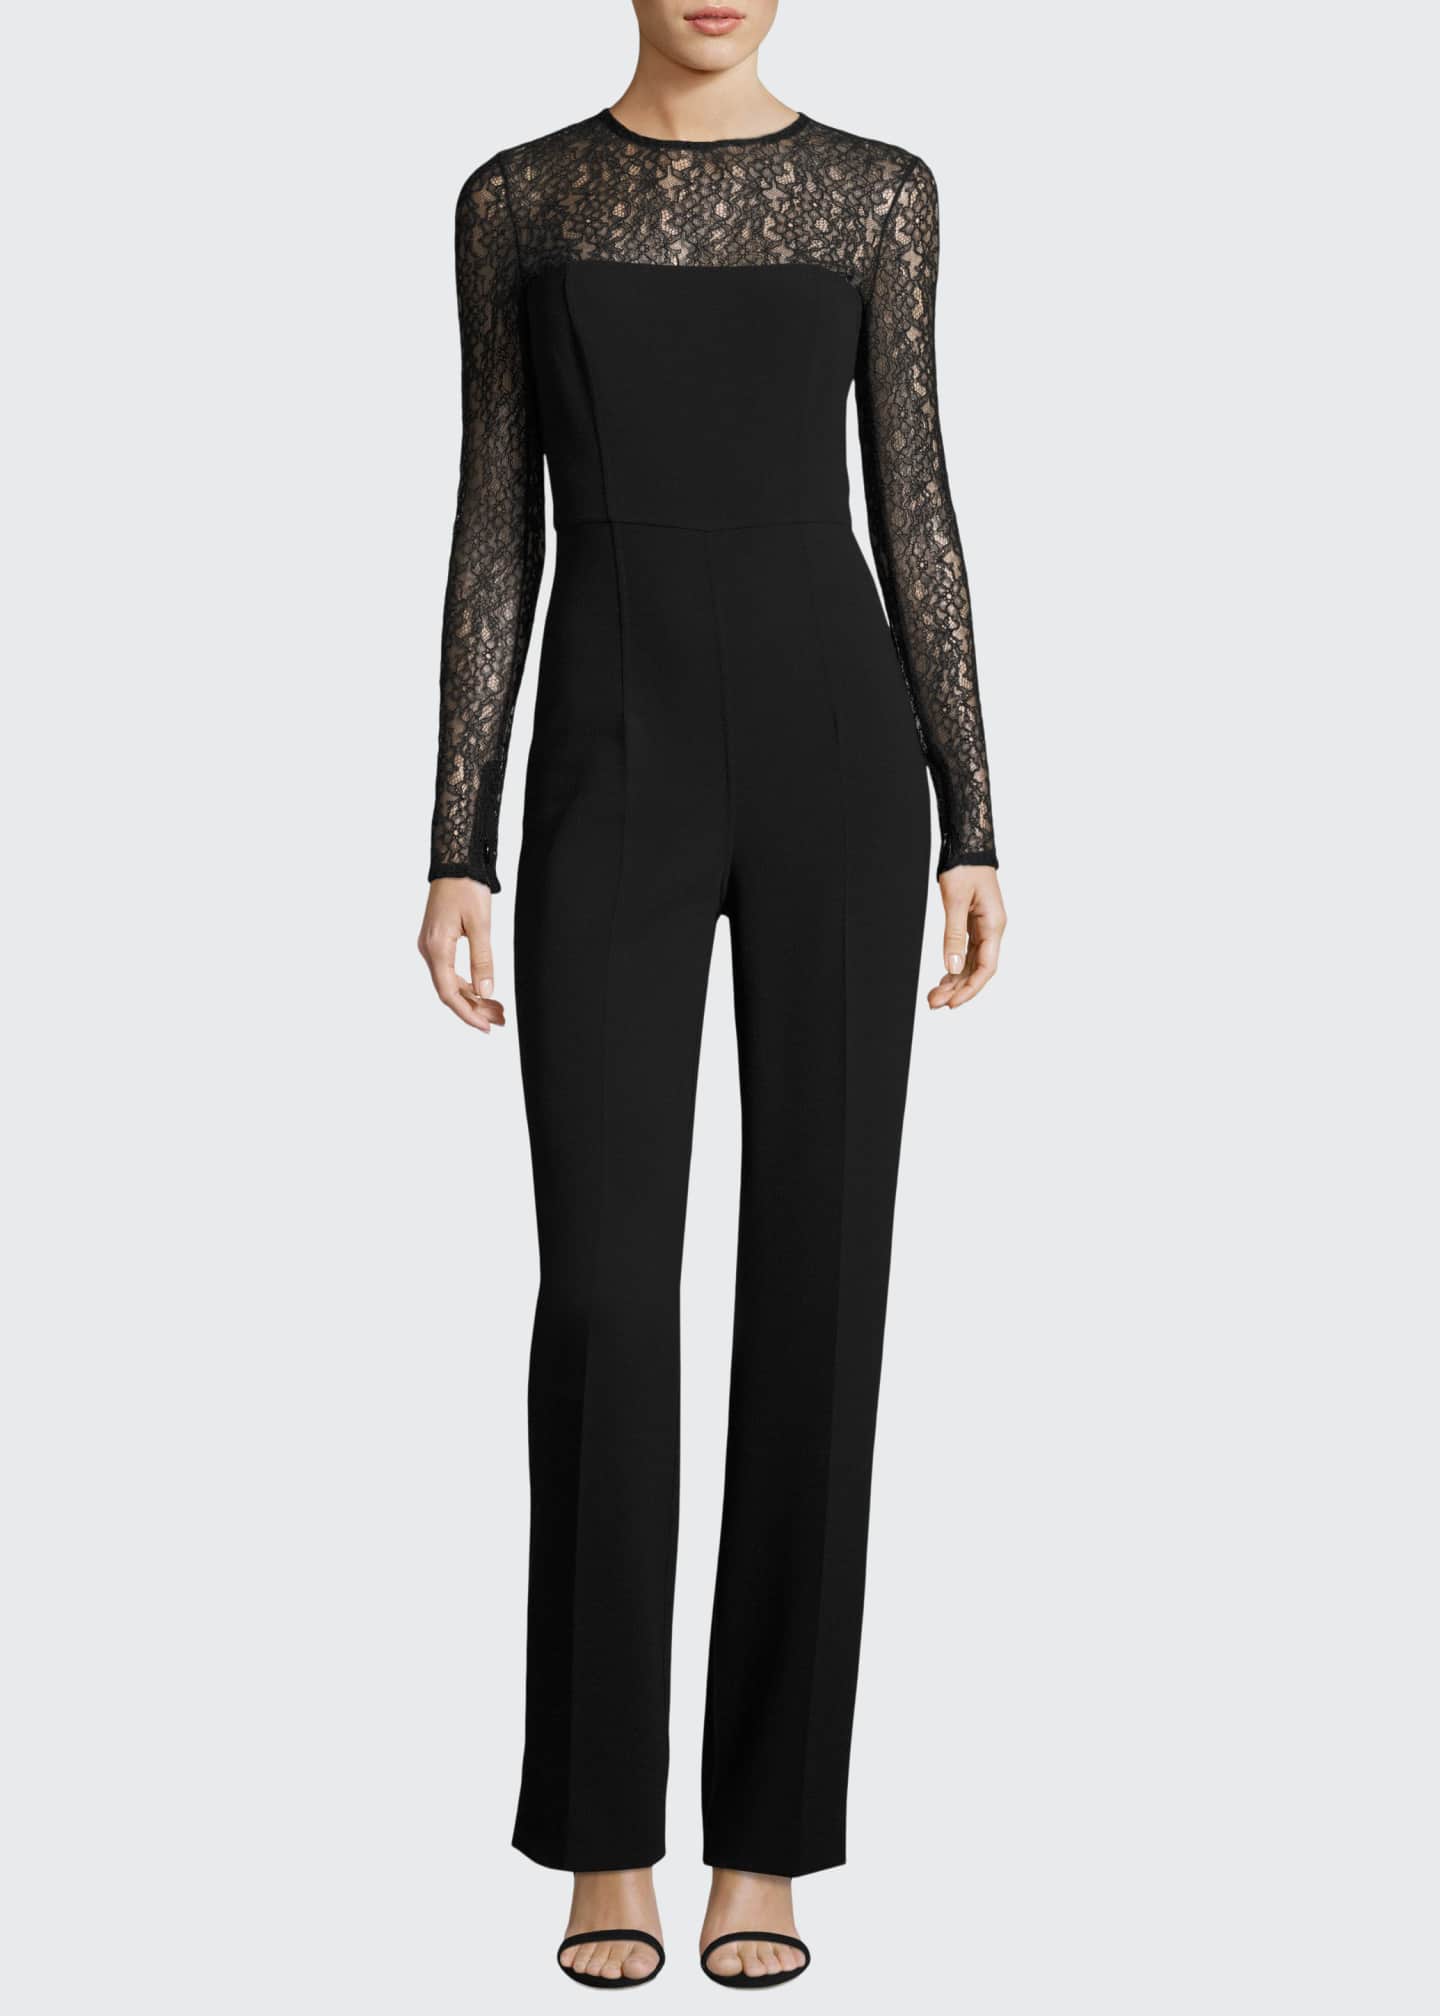 Michael Kors Collection Wool-Crepe Long-Sleeve Jumpsuit, Black - Bergdorf  Goodman